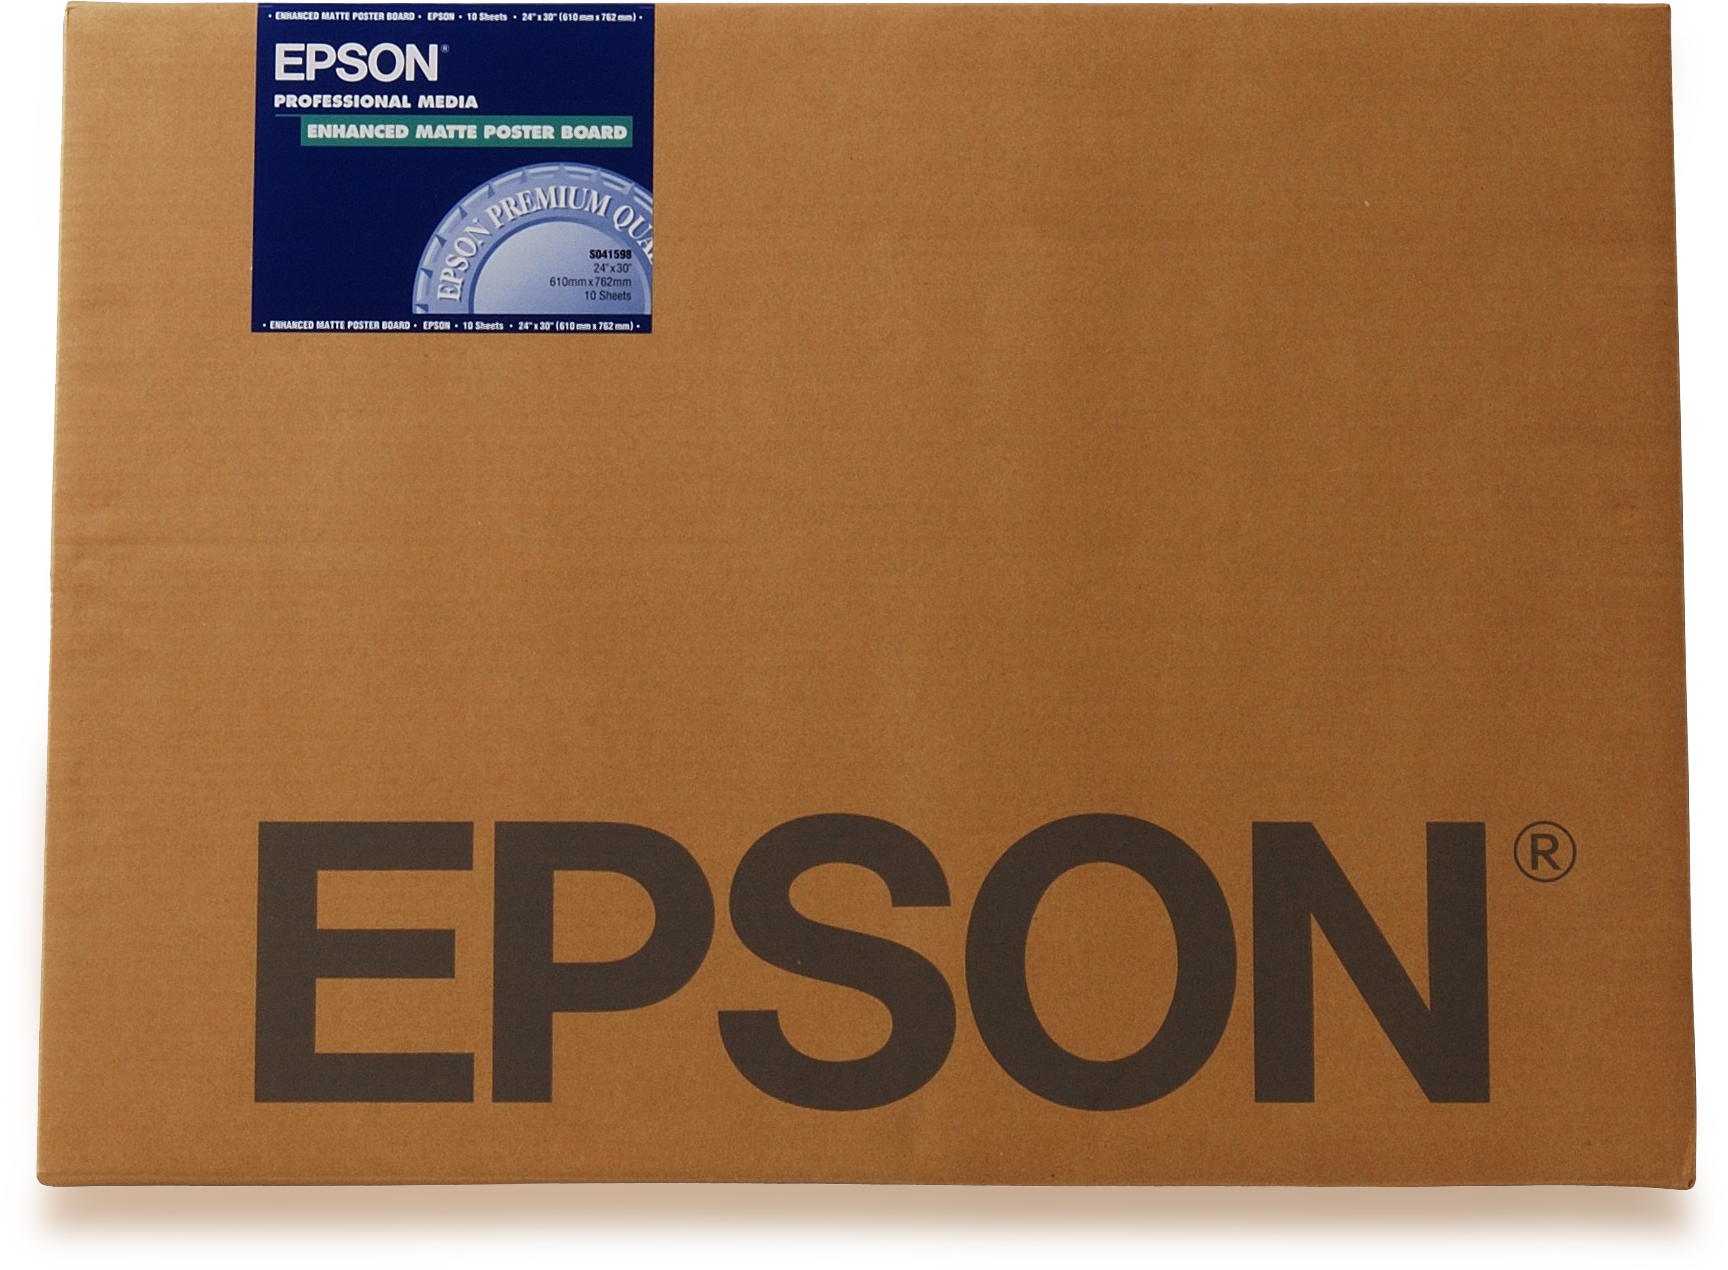 Epson Stylus Pro 9400 | LFP | Printers | Products | Epson Europe